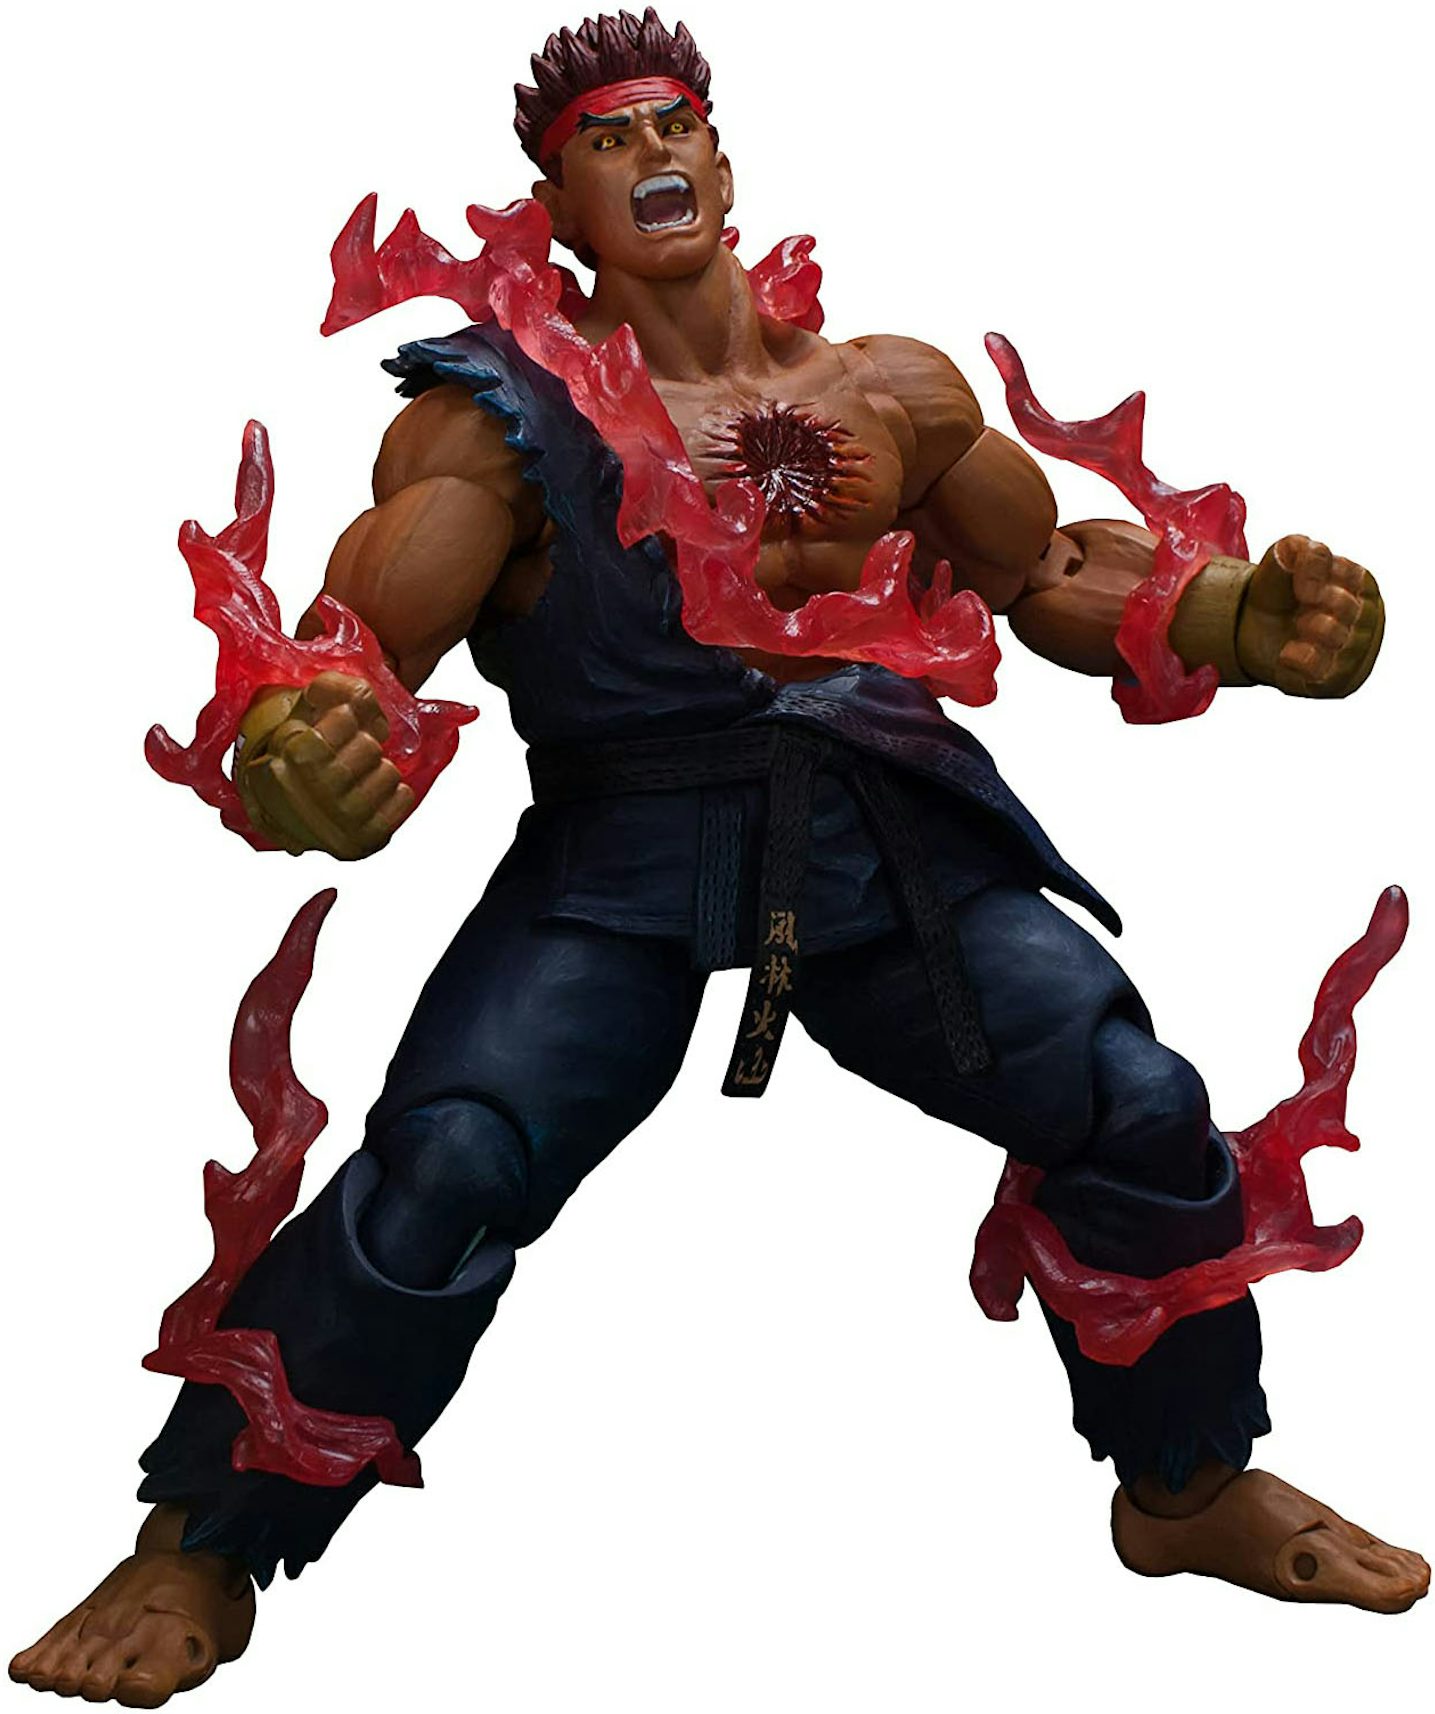 Street Fighter IV Evil Ryu Action Figure